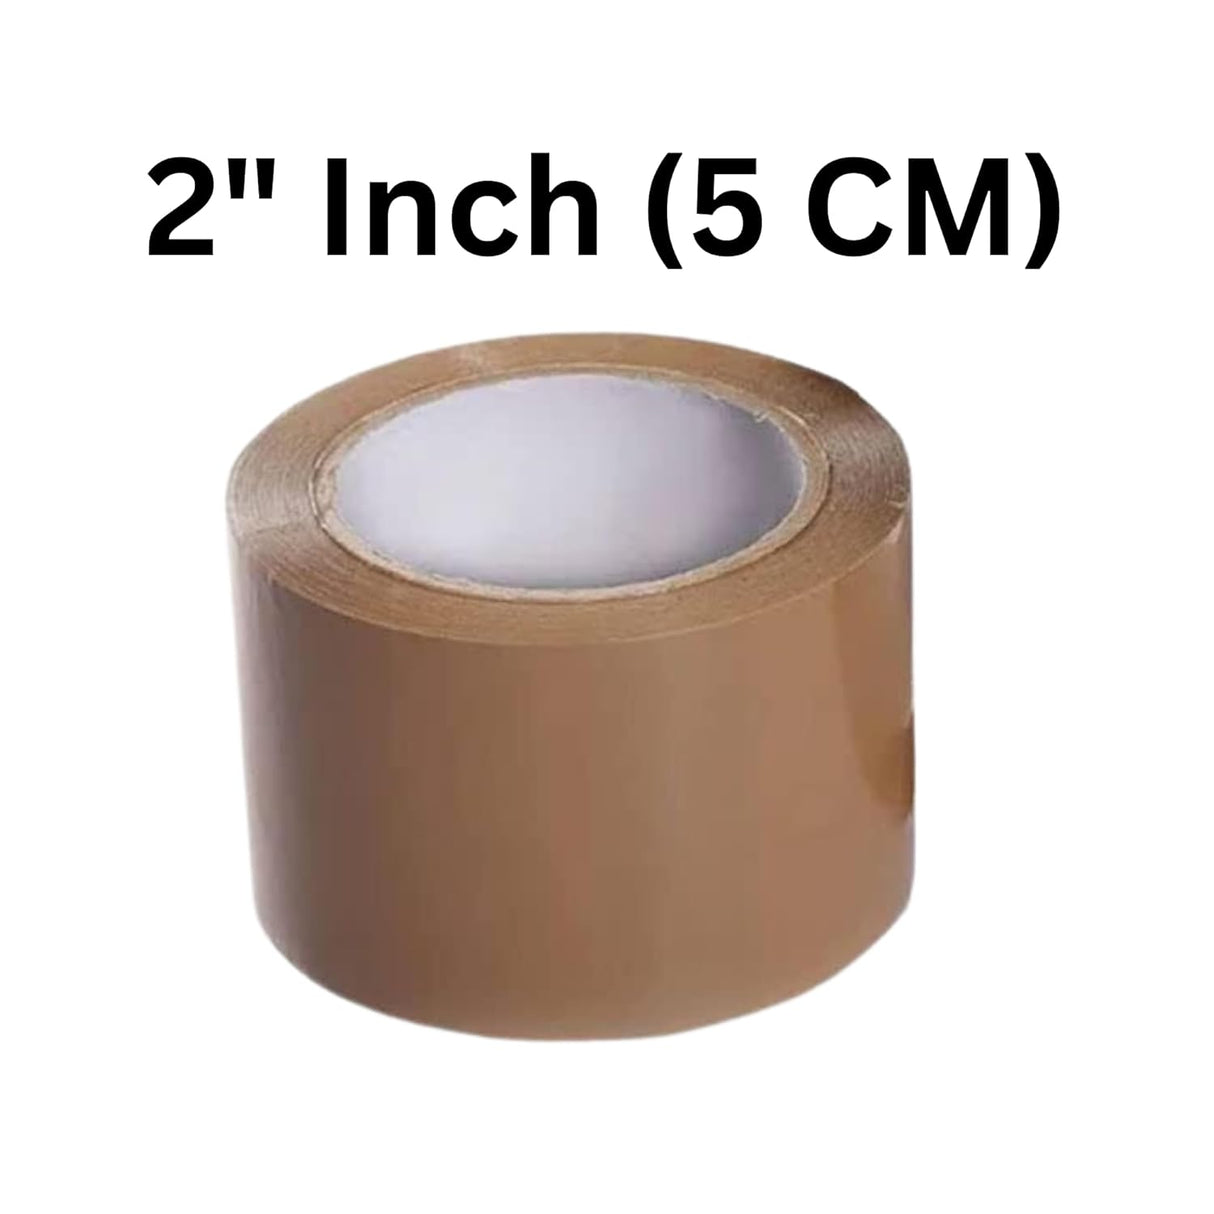 SINGHAL Cello Tape/BOPP Tape/Packaging Tape Premium Grade 2 Inch (5 cm) width 65 meter length Brown (Set of 6)